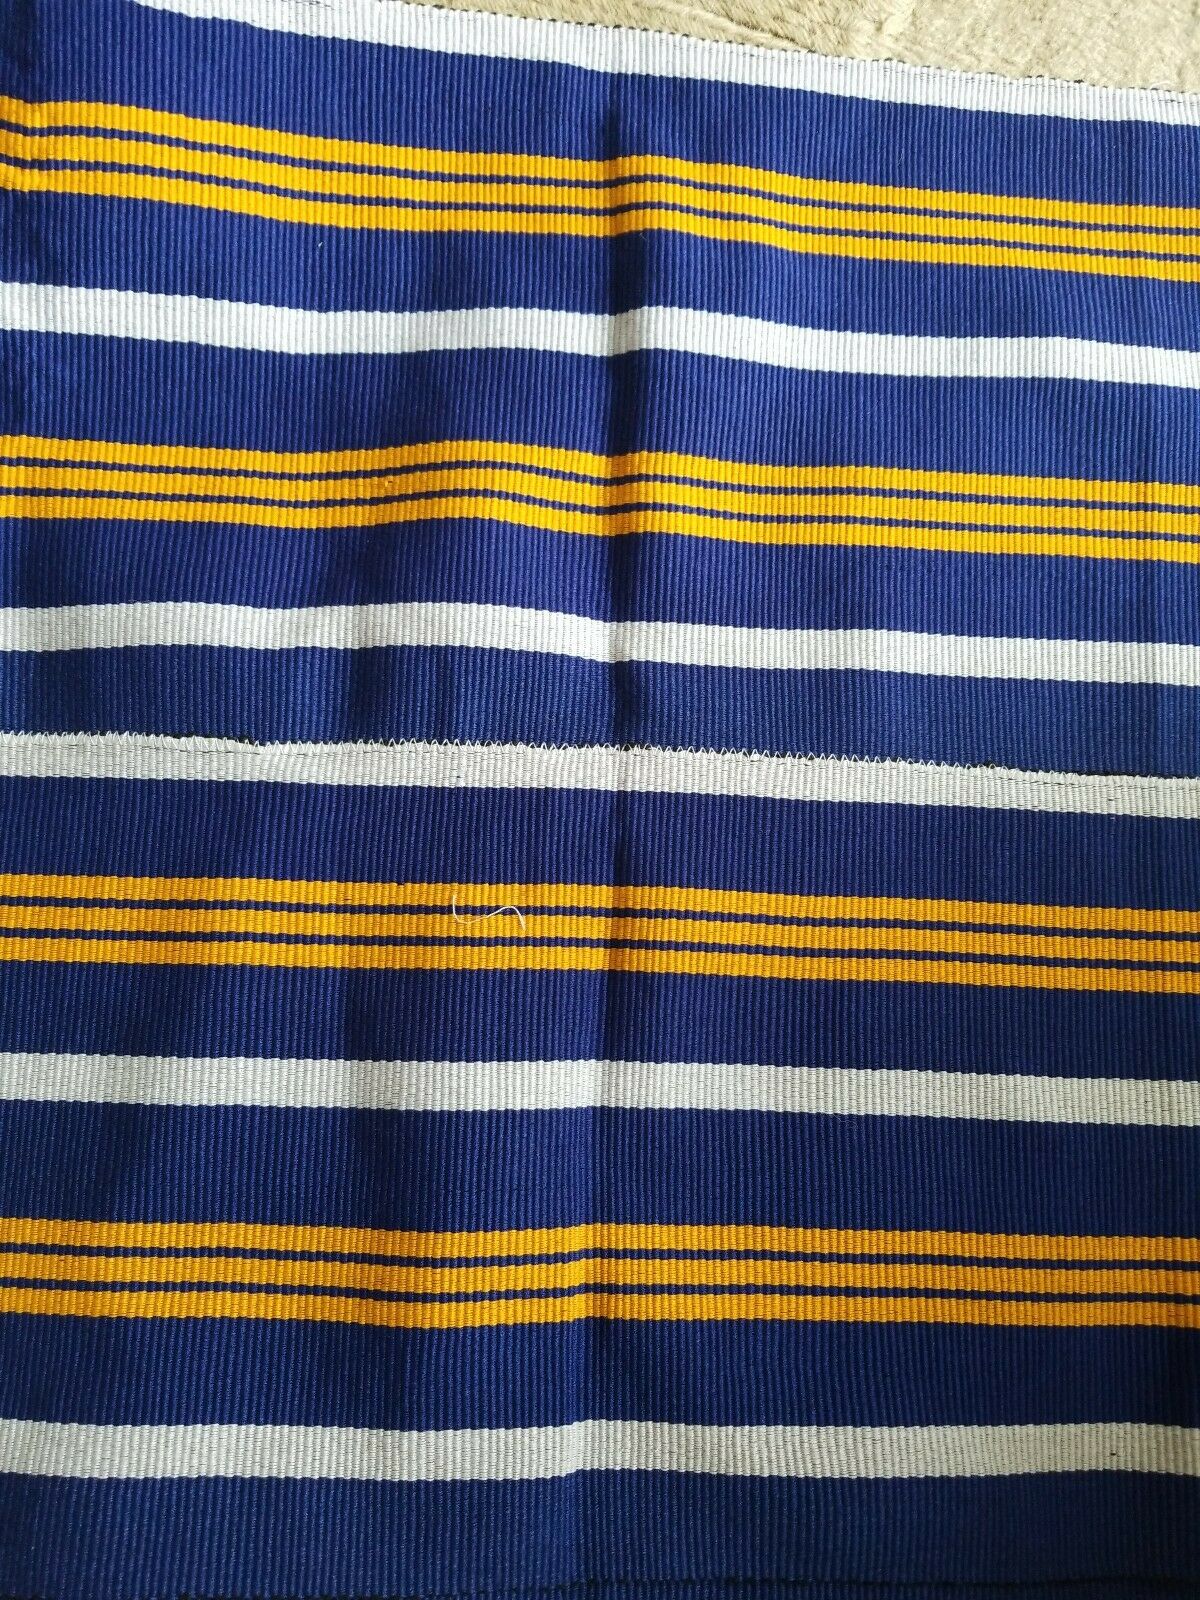 Faso Da Fani Fabric From Boukina Faso~Blue Yellow &white 41(1yd&5")×17"